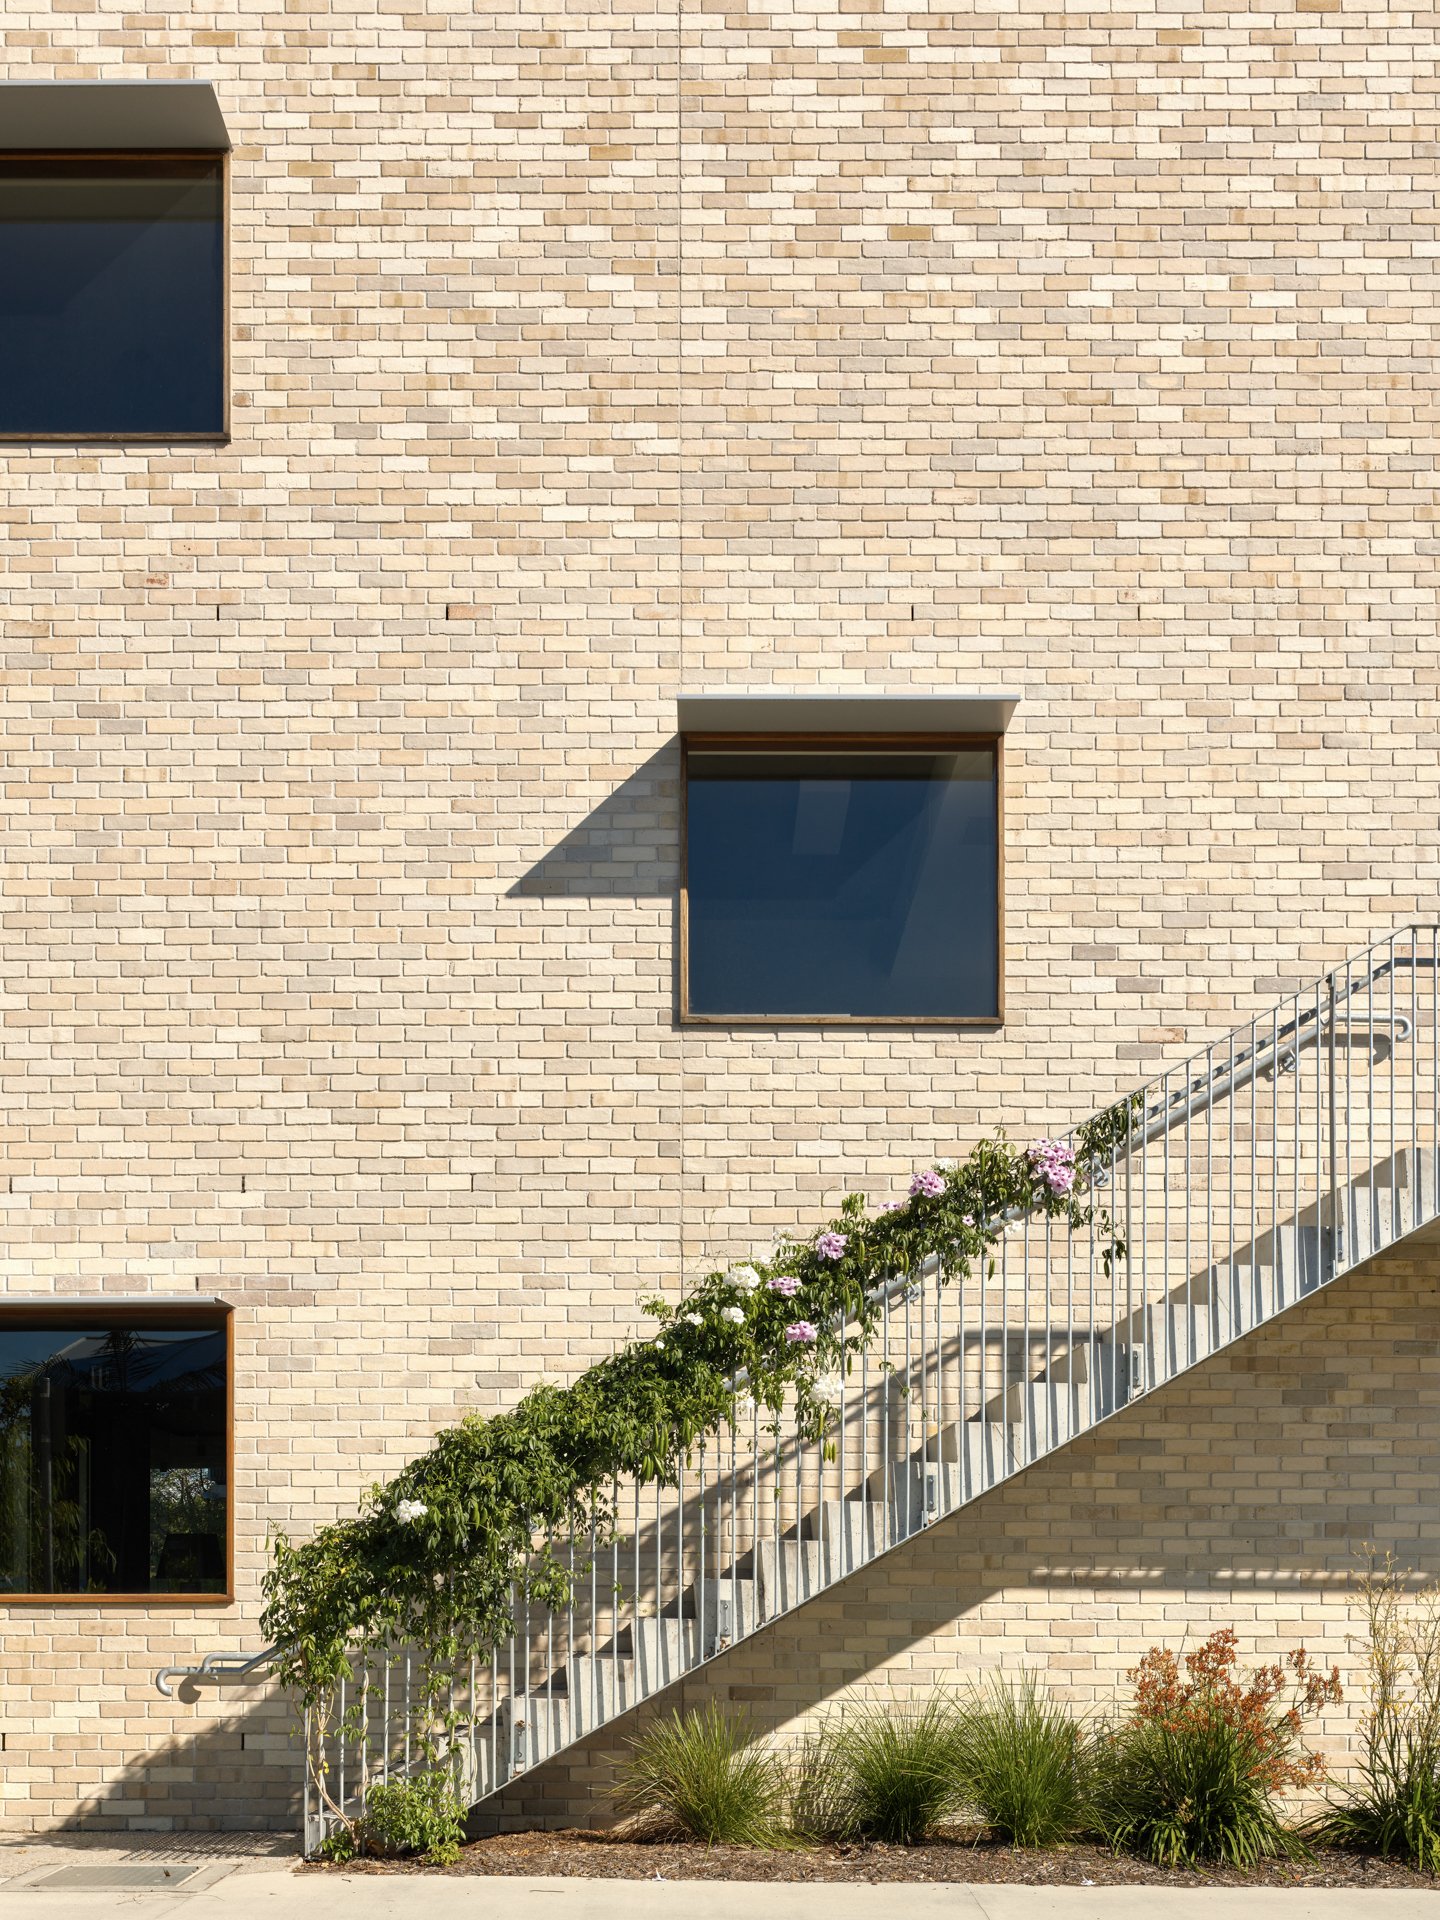 Krause Bricks and architectural Windows